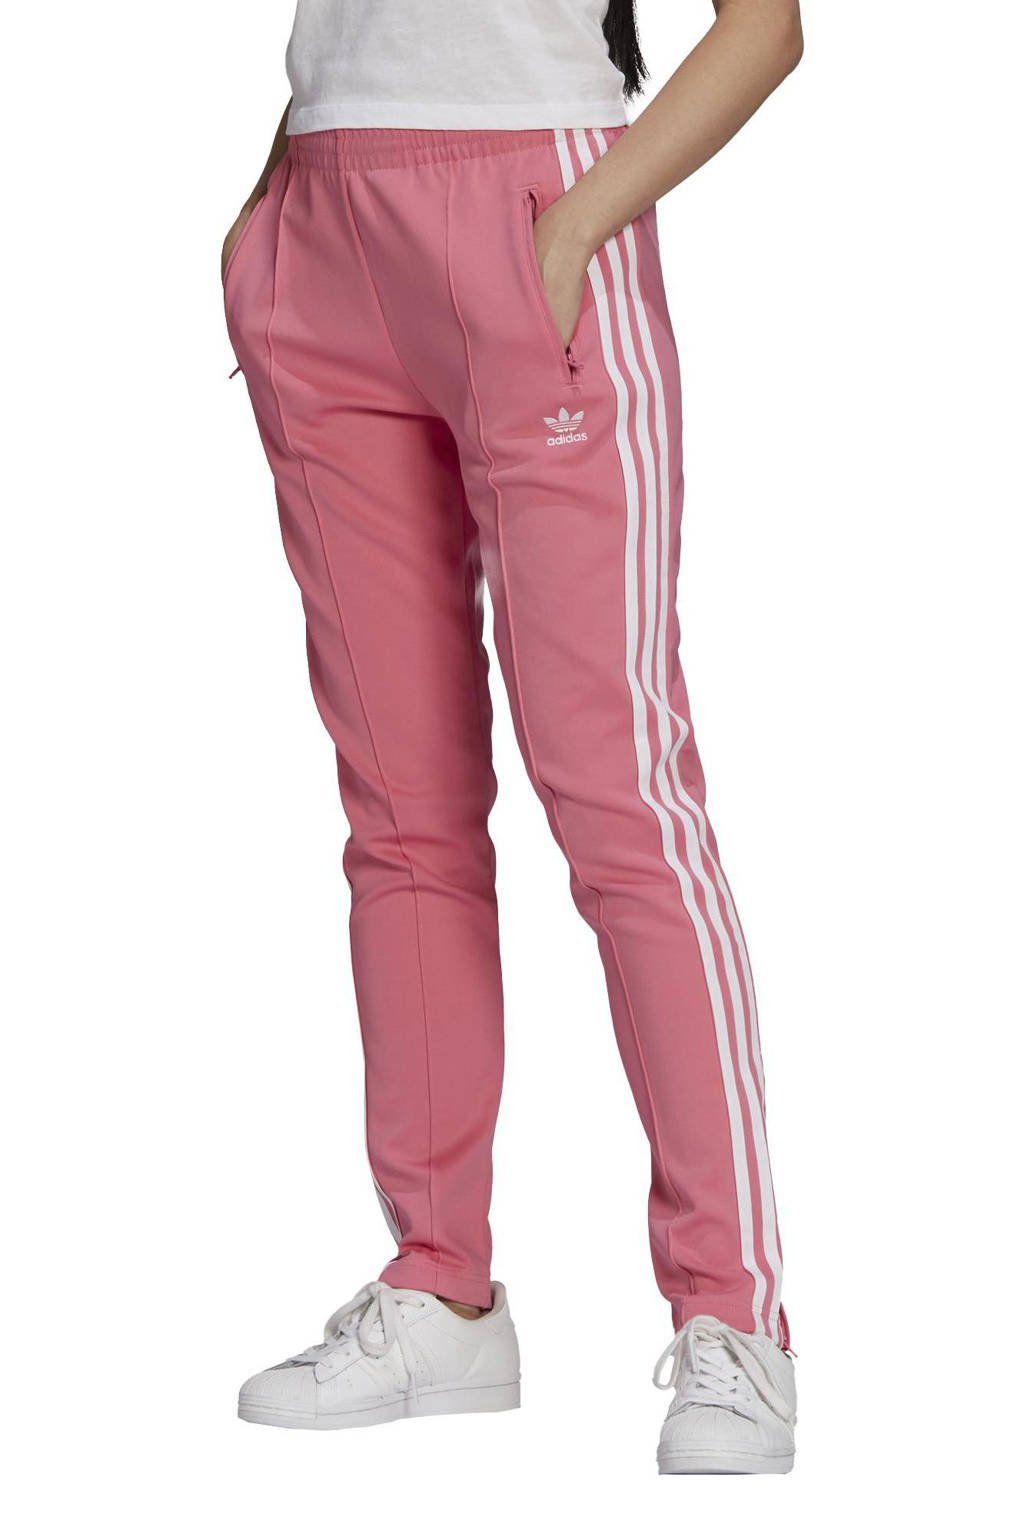 Originals Super Star Adicolor joggingbroek roze | wehkamp